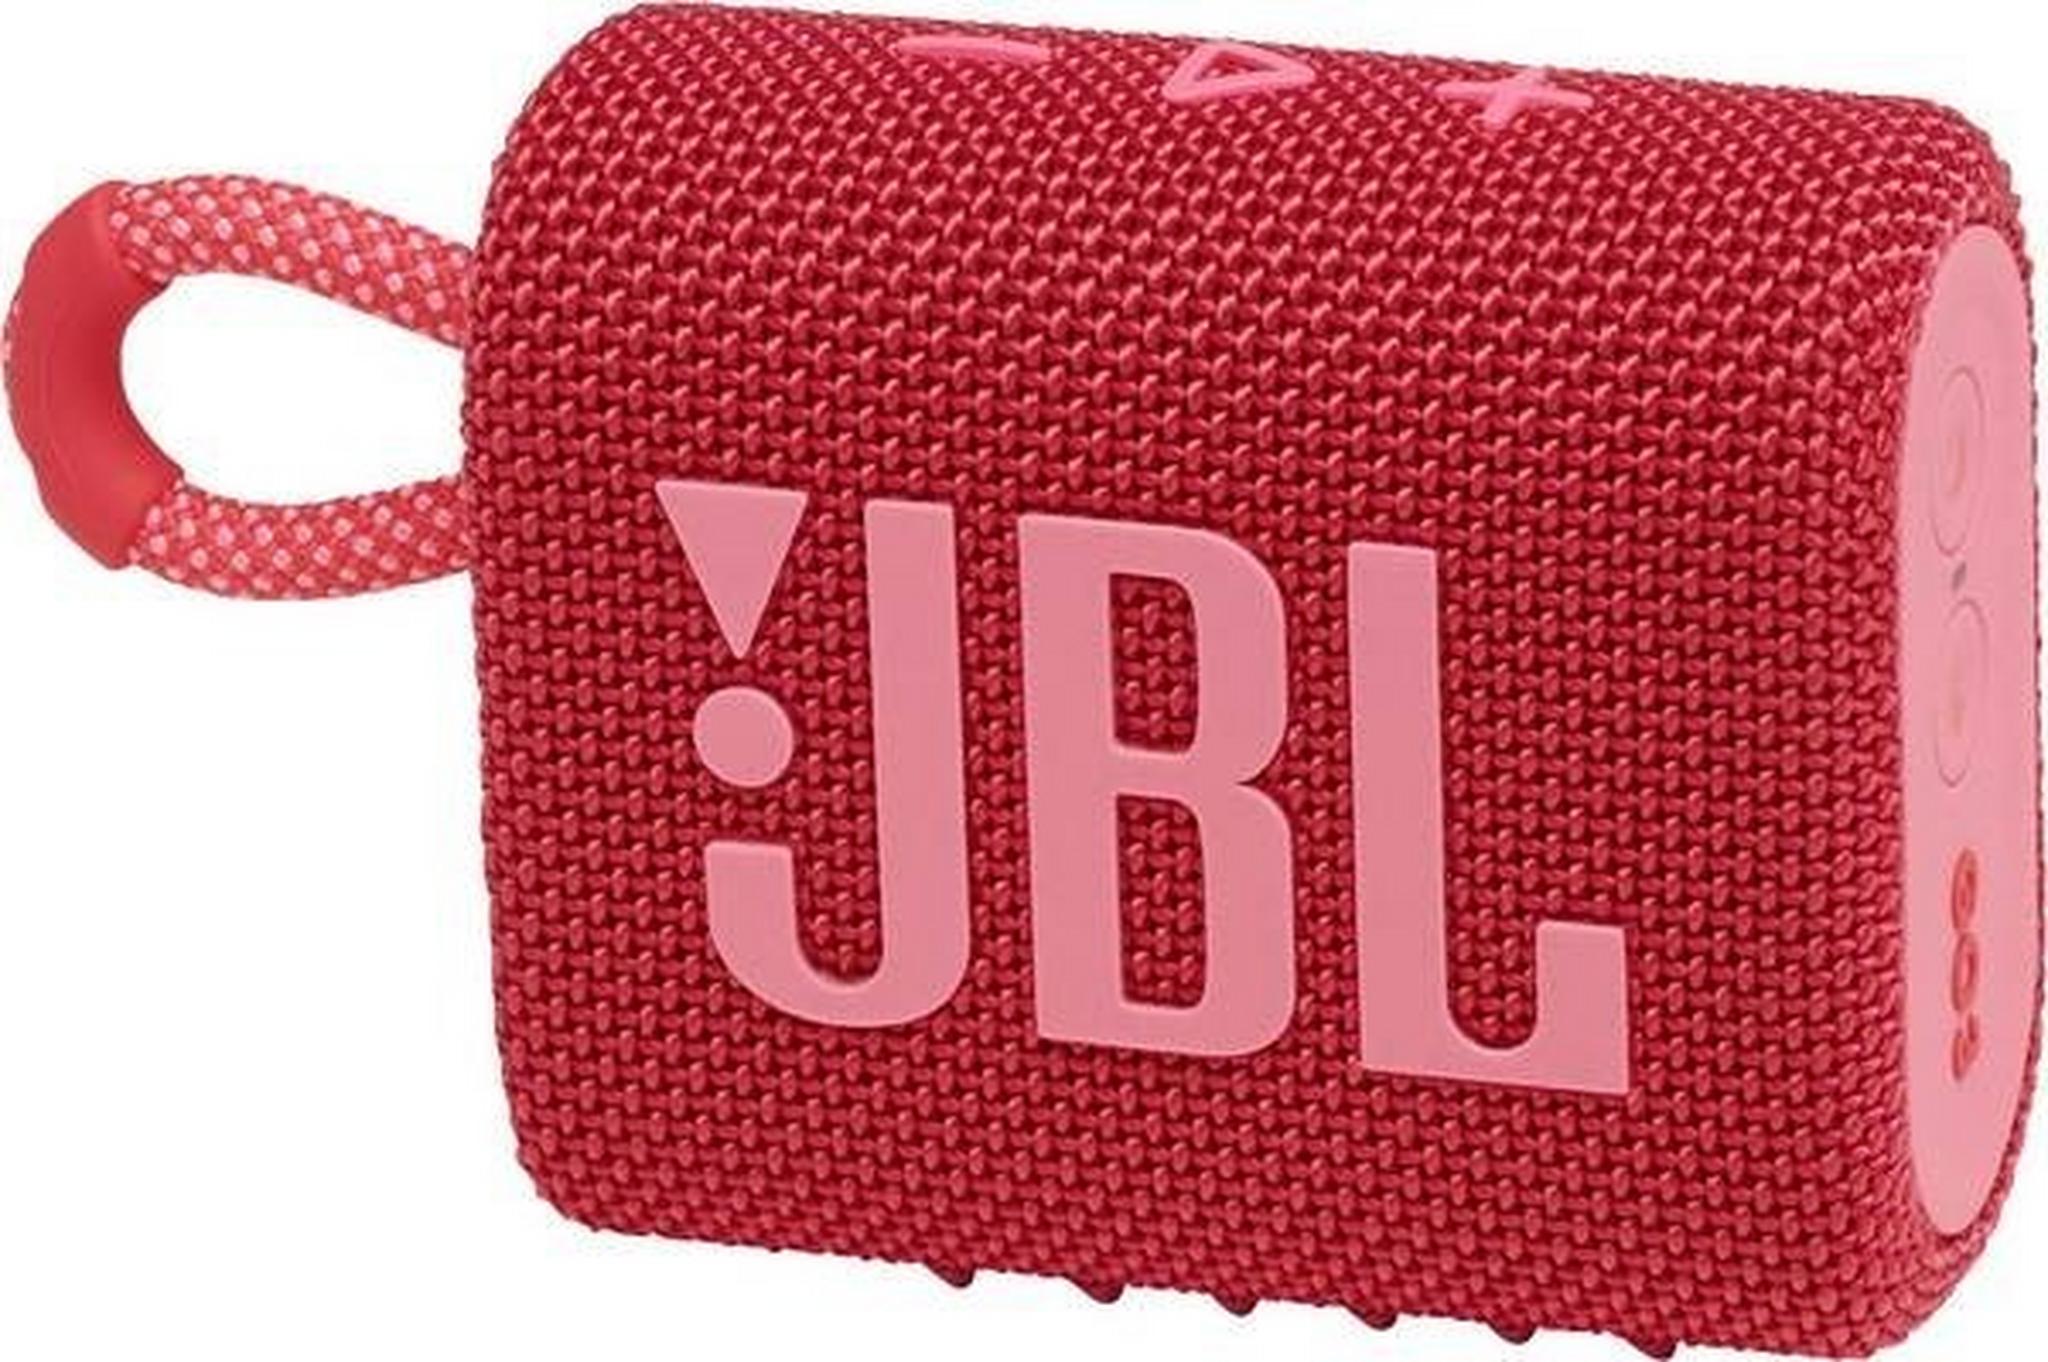 JBL Go 3 Portable Bluetooth speaker Water-proof, Dust-proof - Red